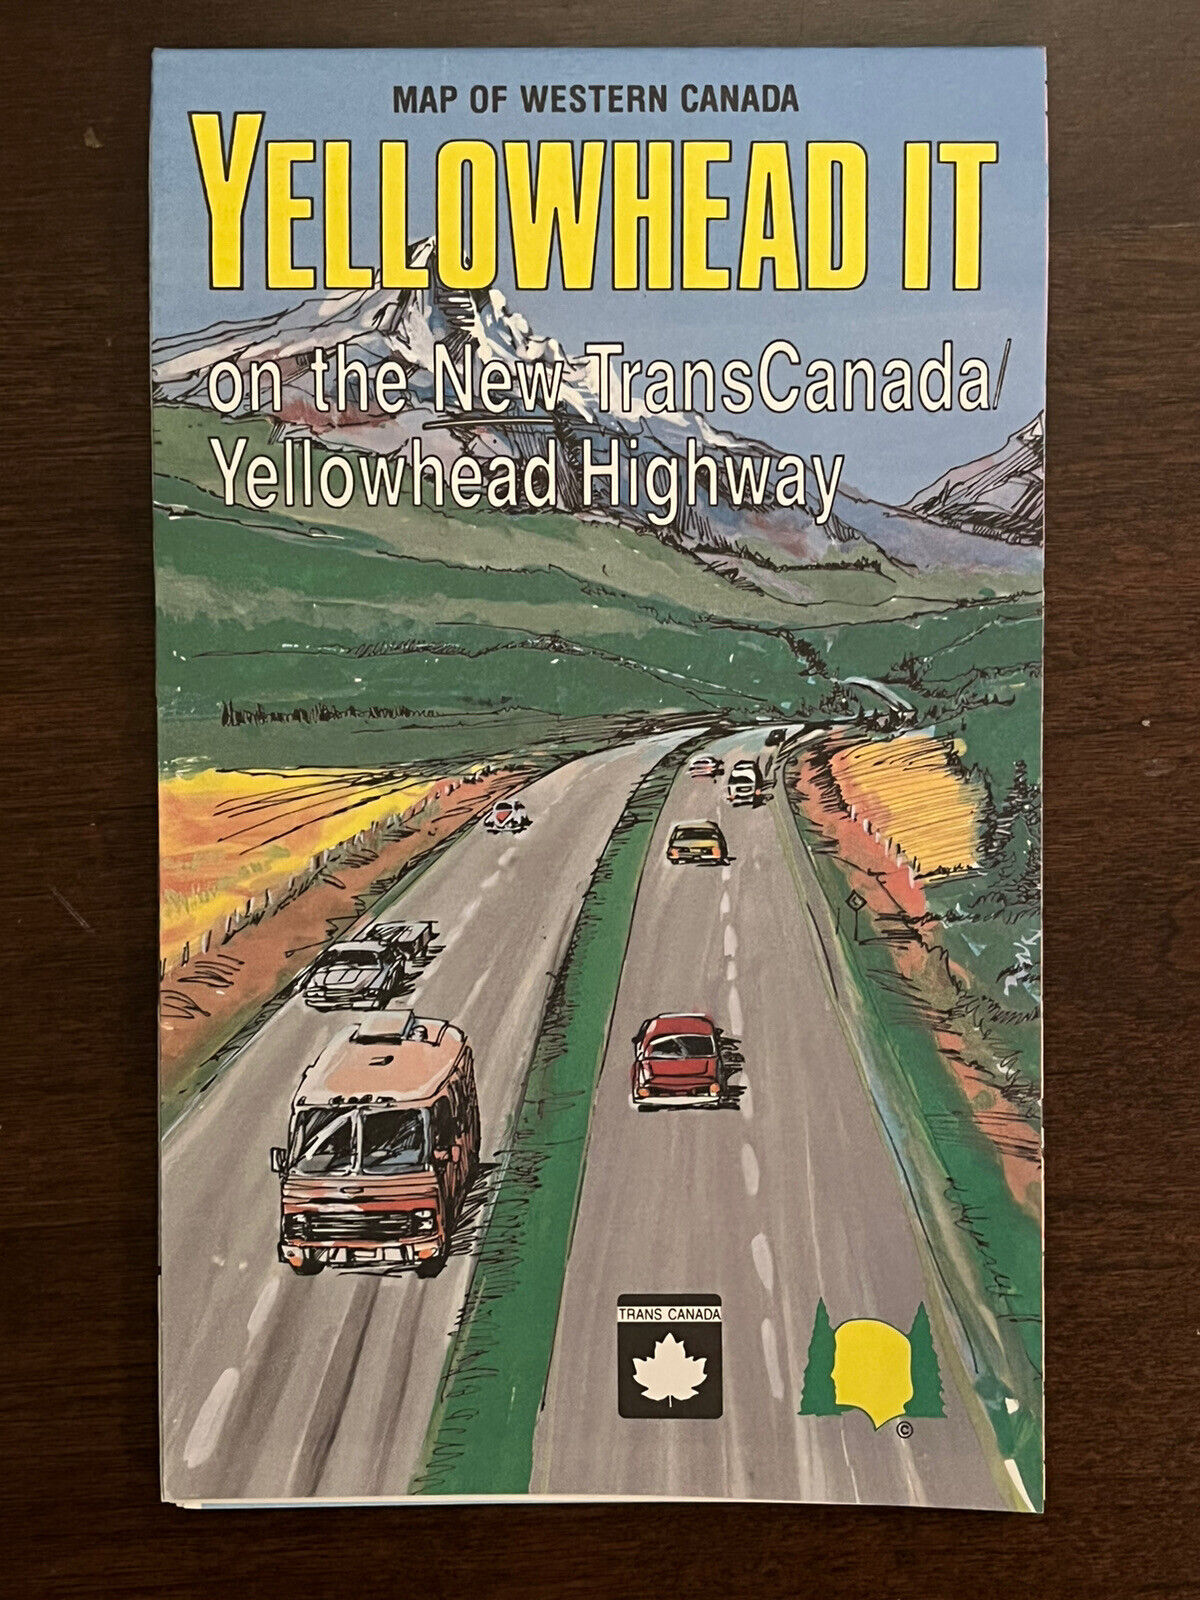 Yellowhead It Trans Canada Highway Map Western Canada Yellowhead Highway Assoc